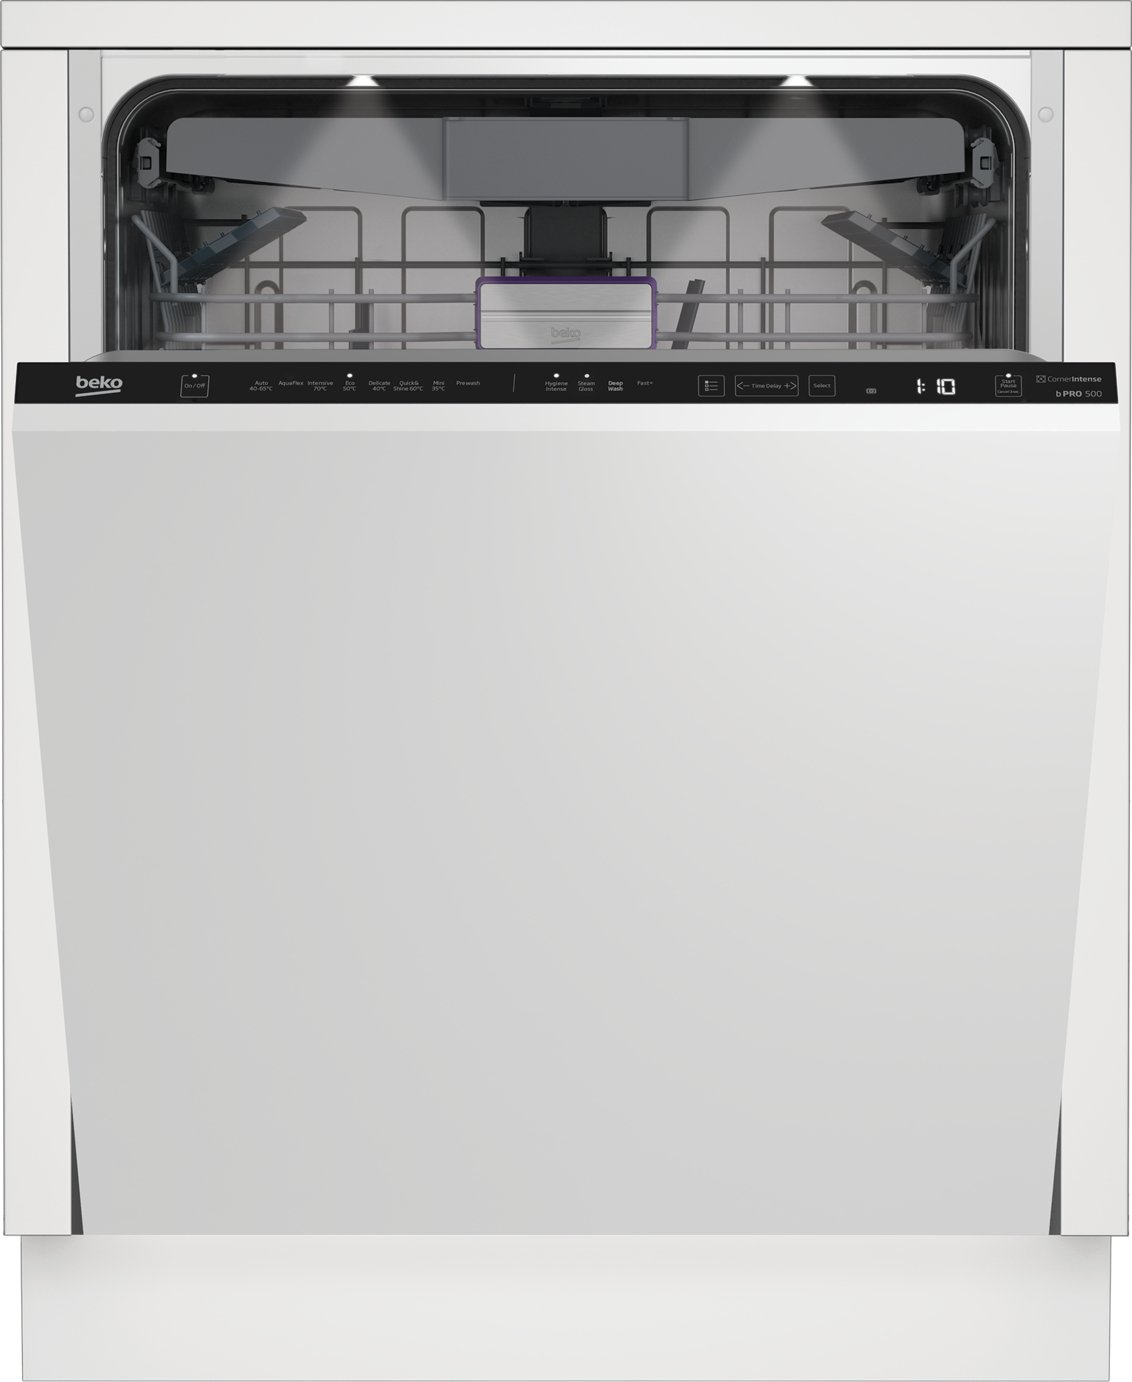 Beko BDIN38650C Full Size Integrated Dishwasher